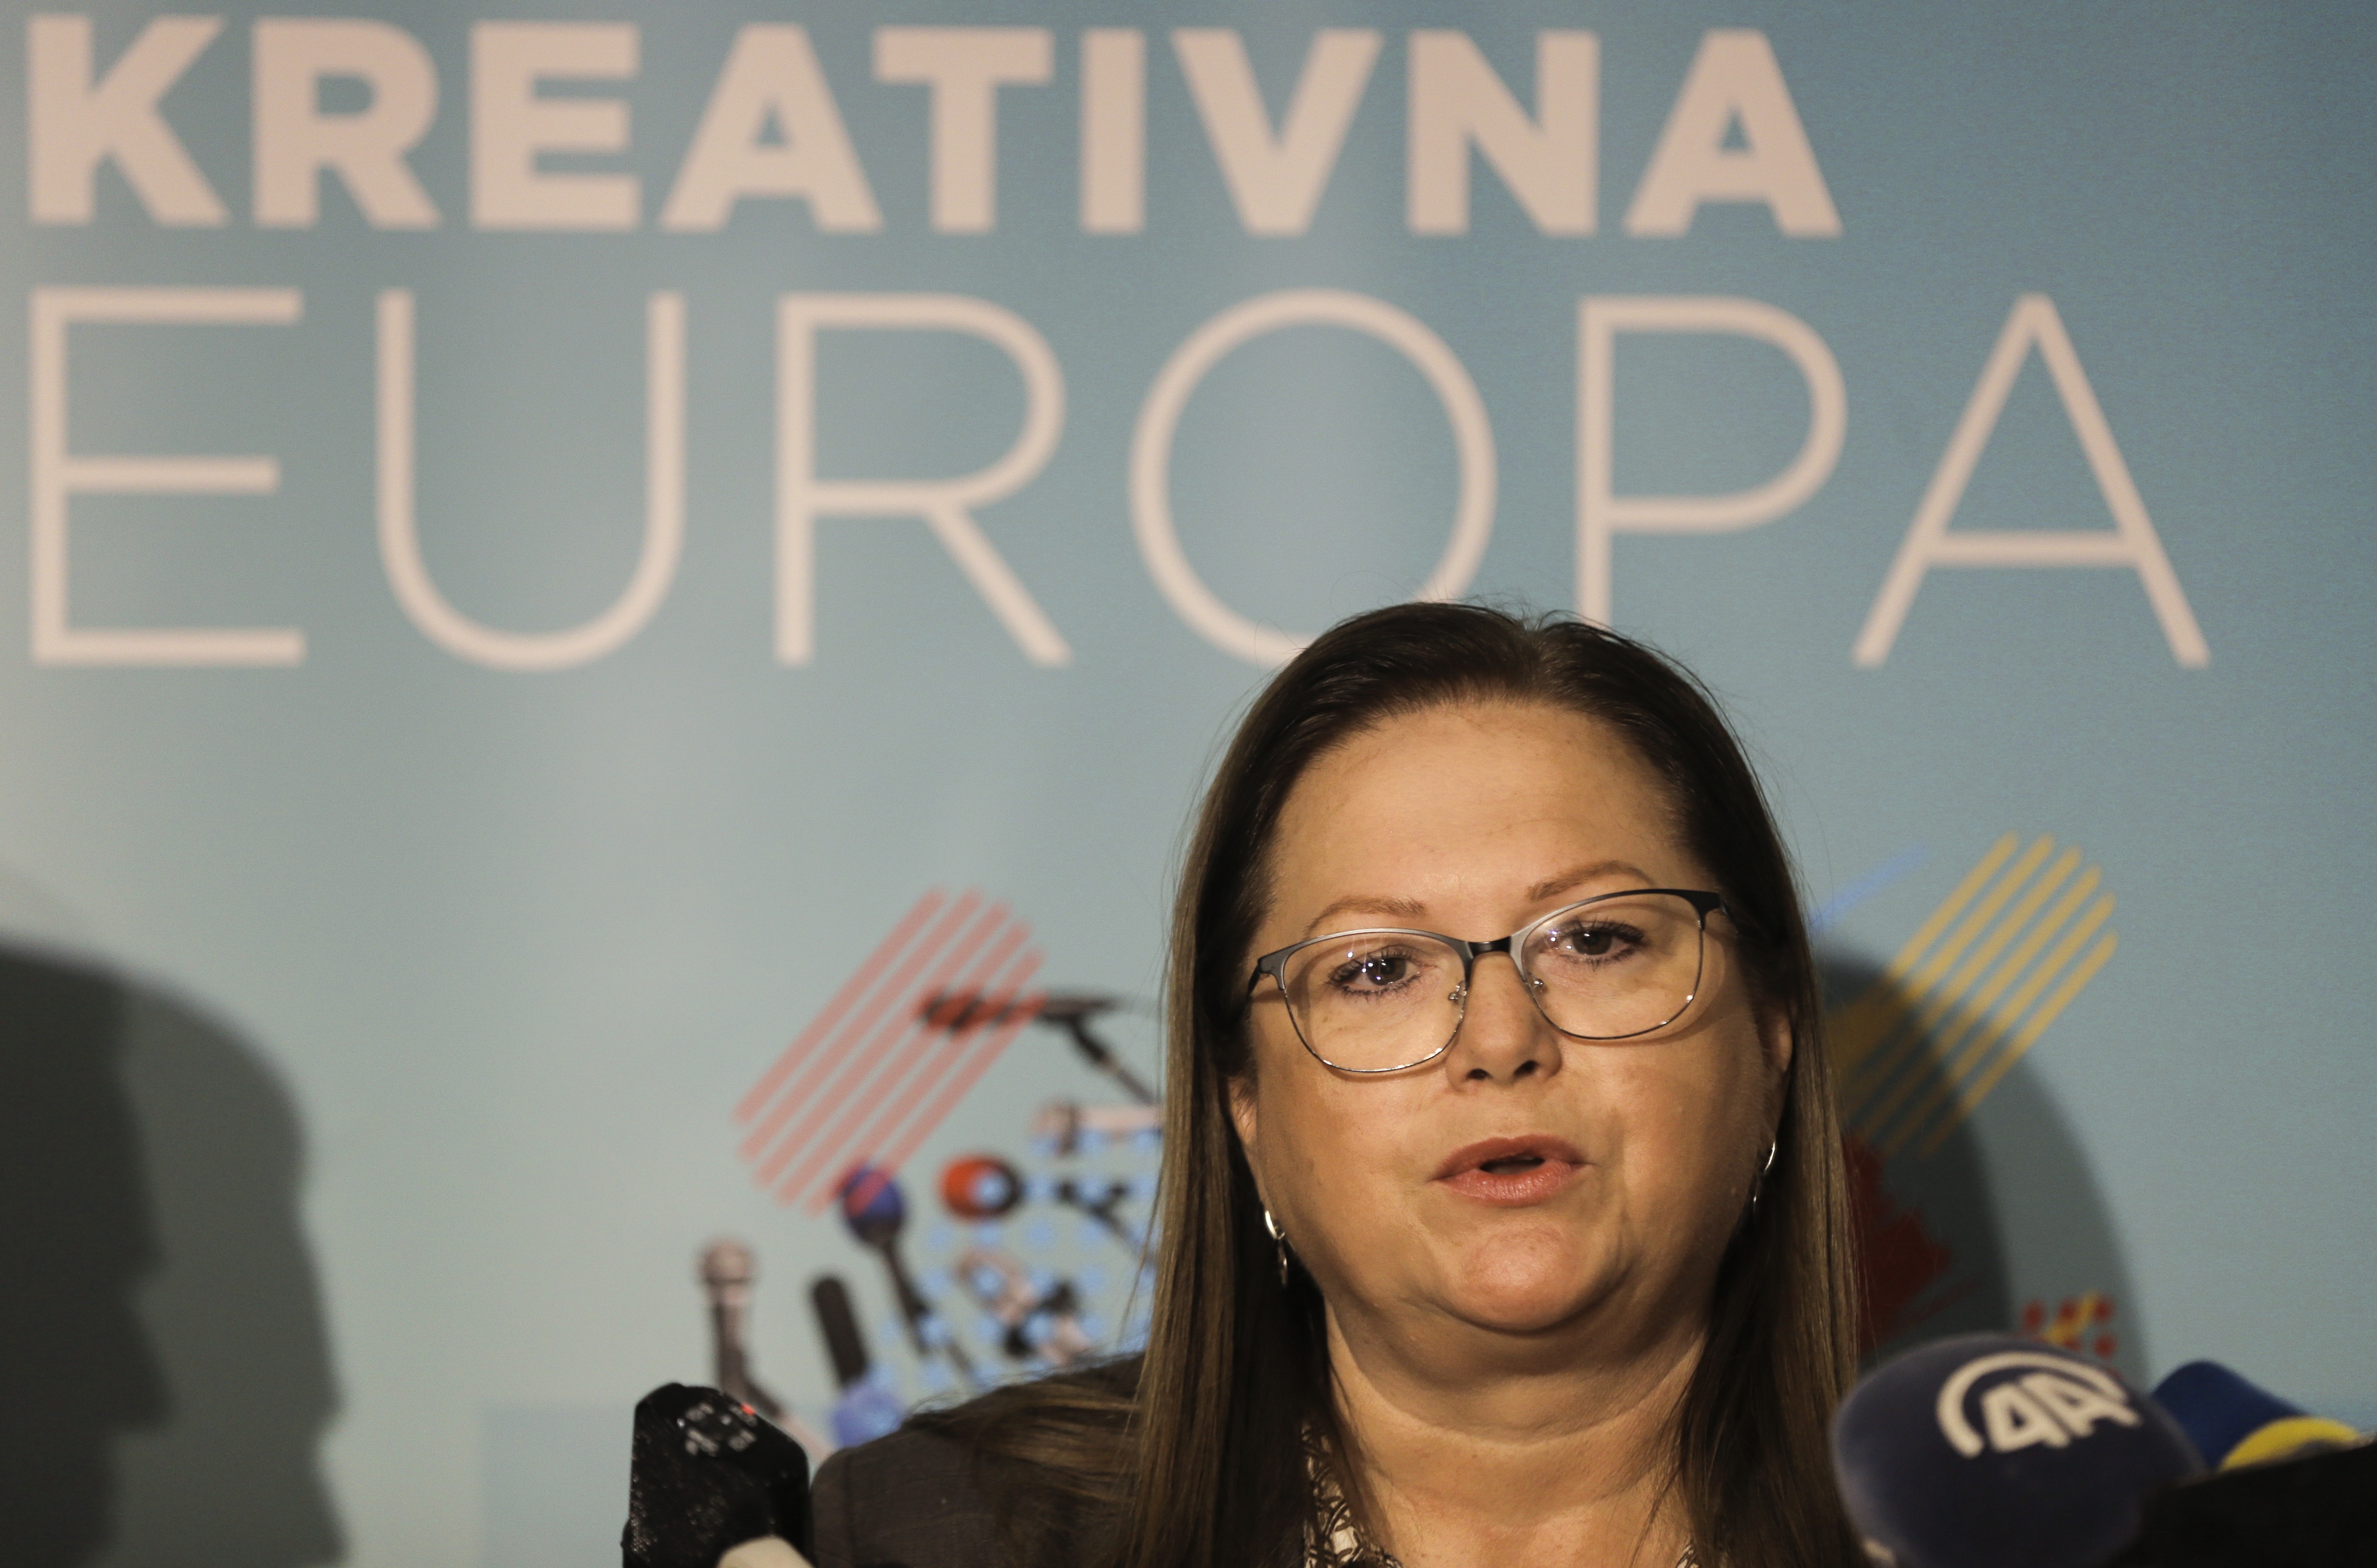 U Parlamentarnoj skupštini BiH upriličen info dan “Kreativna Evropa“ i predstavljen novi desk